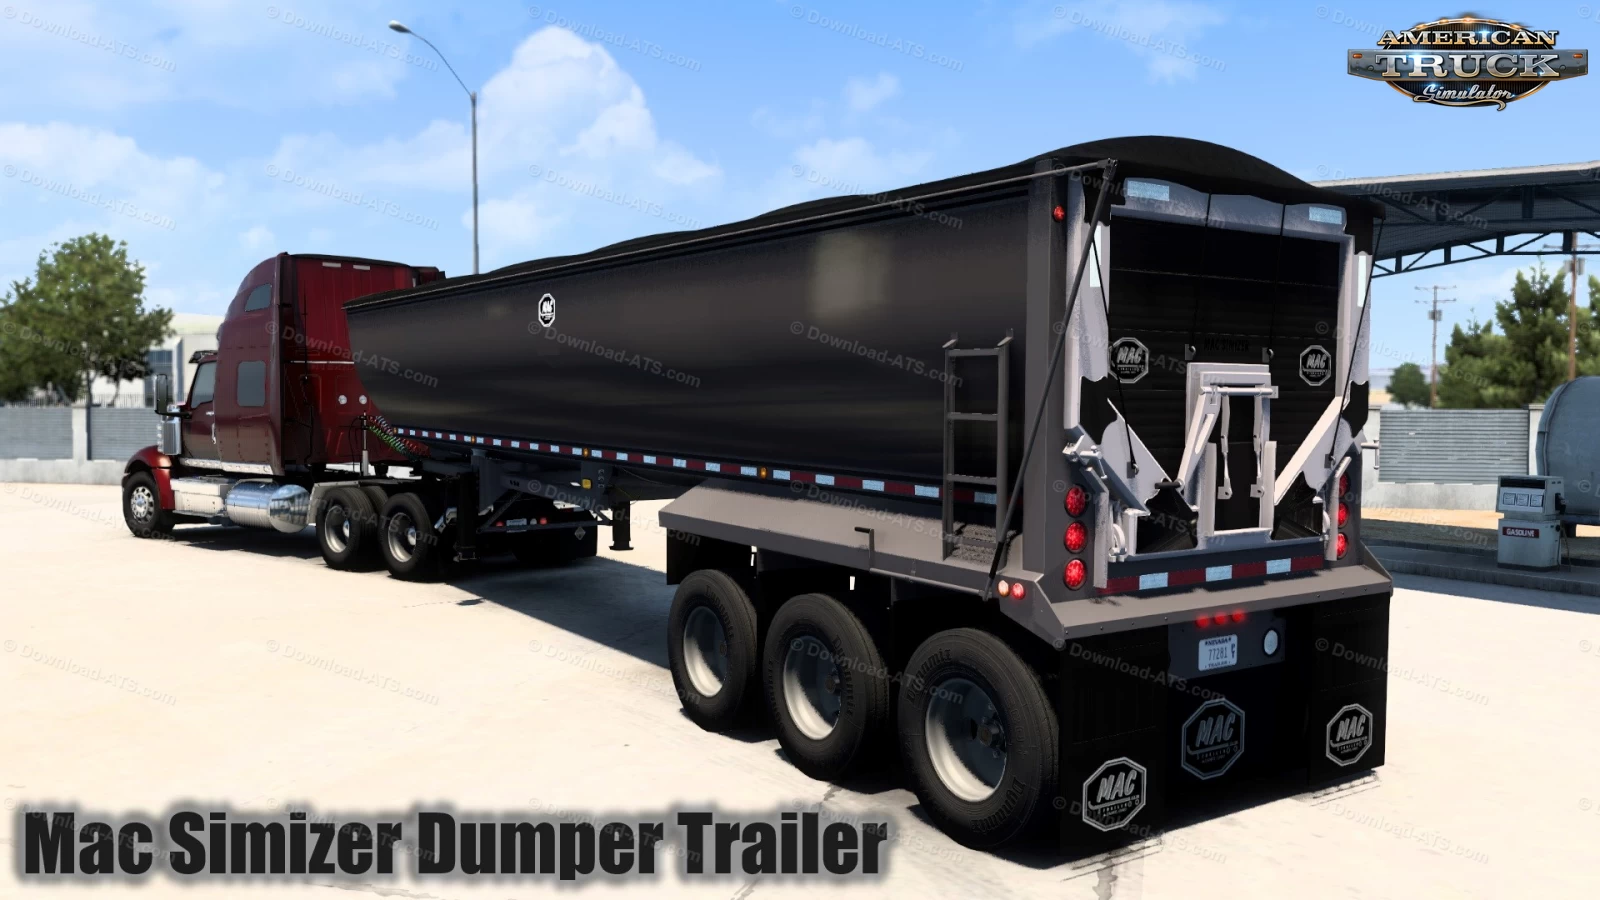 Mac Simizer Dumper Trailer Owned v2.0 (1.40.x) for ATS